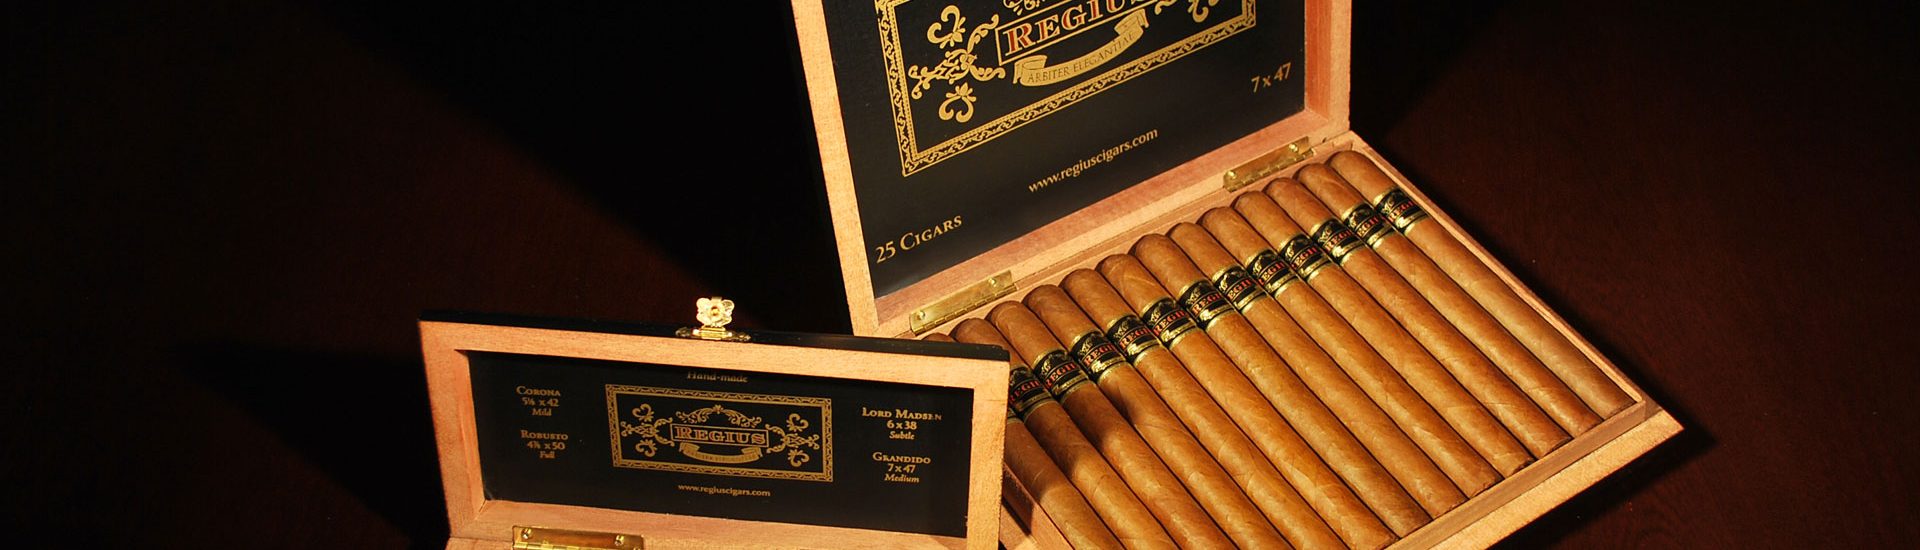 The World's Most Expensive Cigars - Puro Prestige